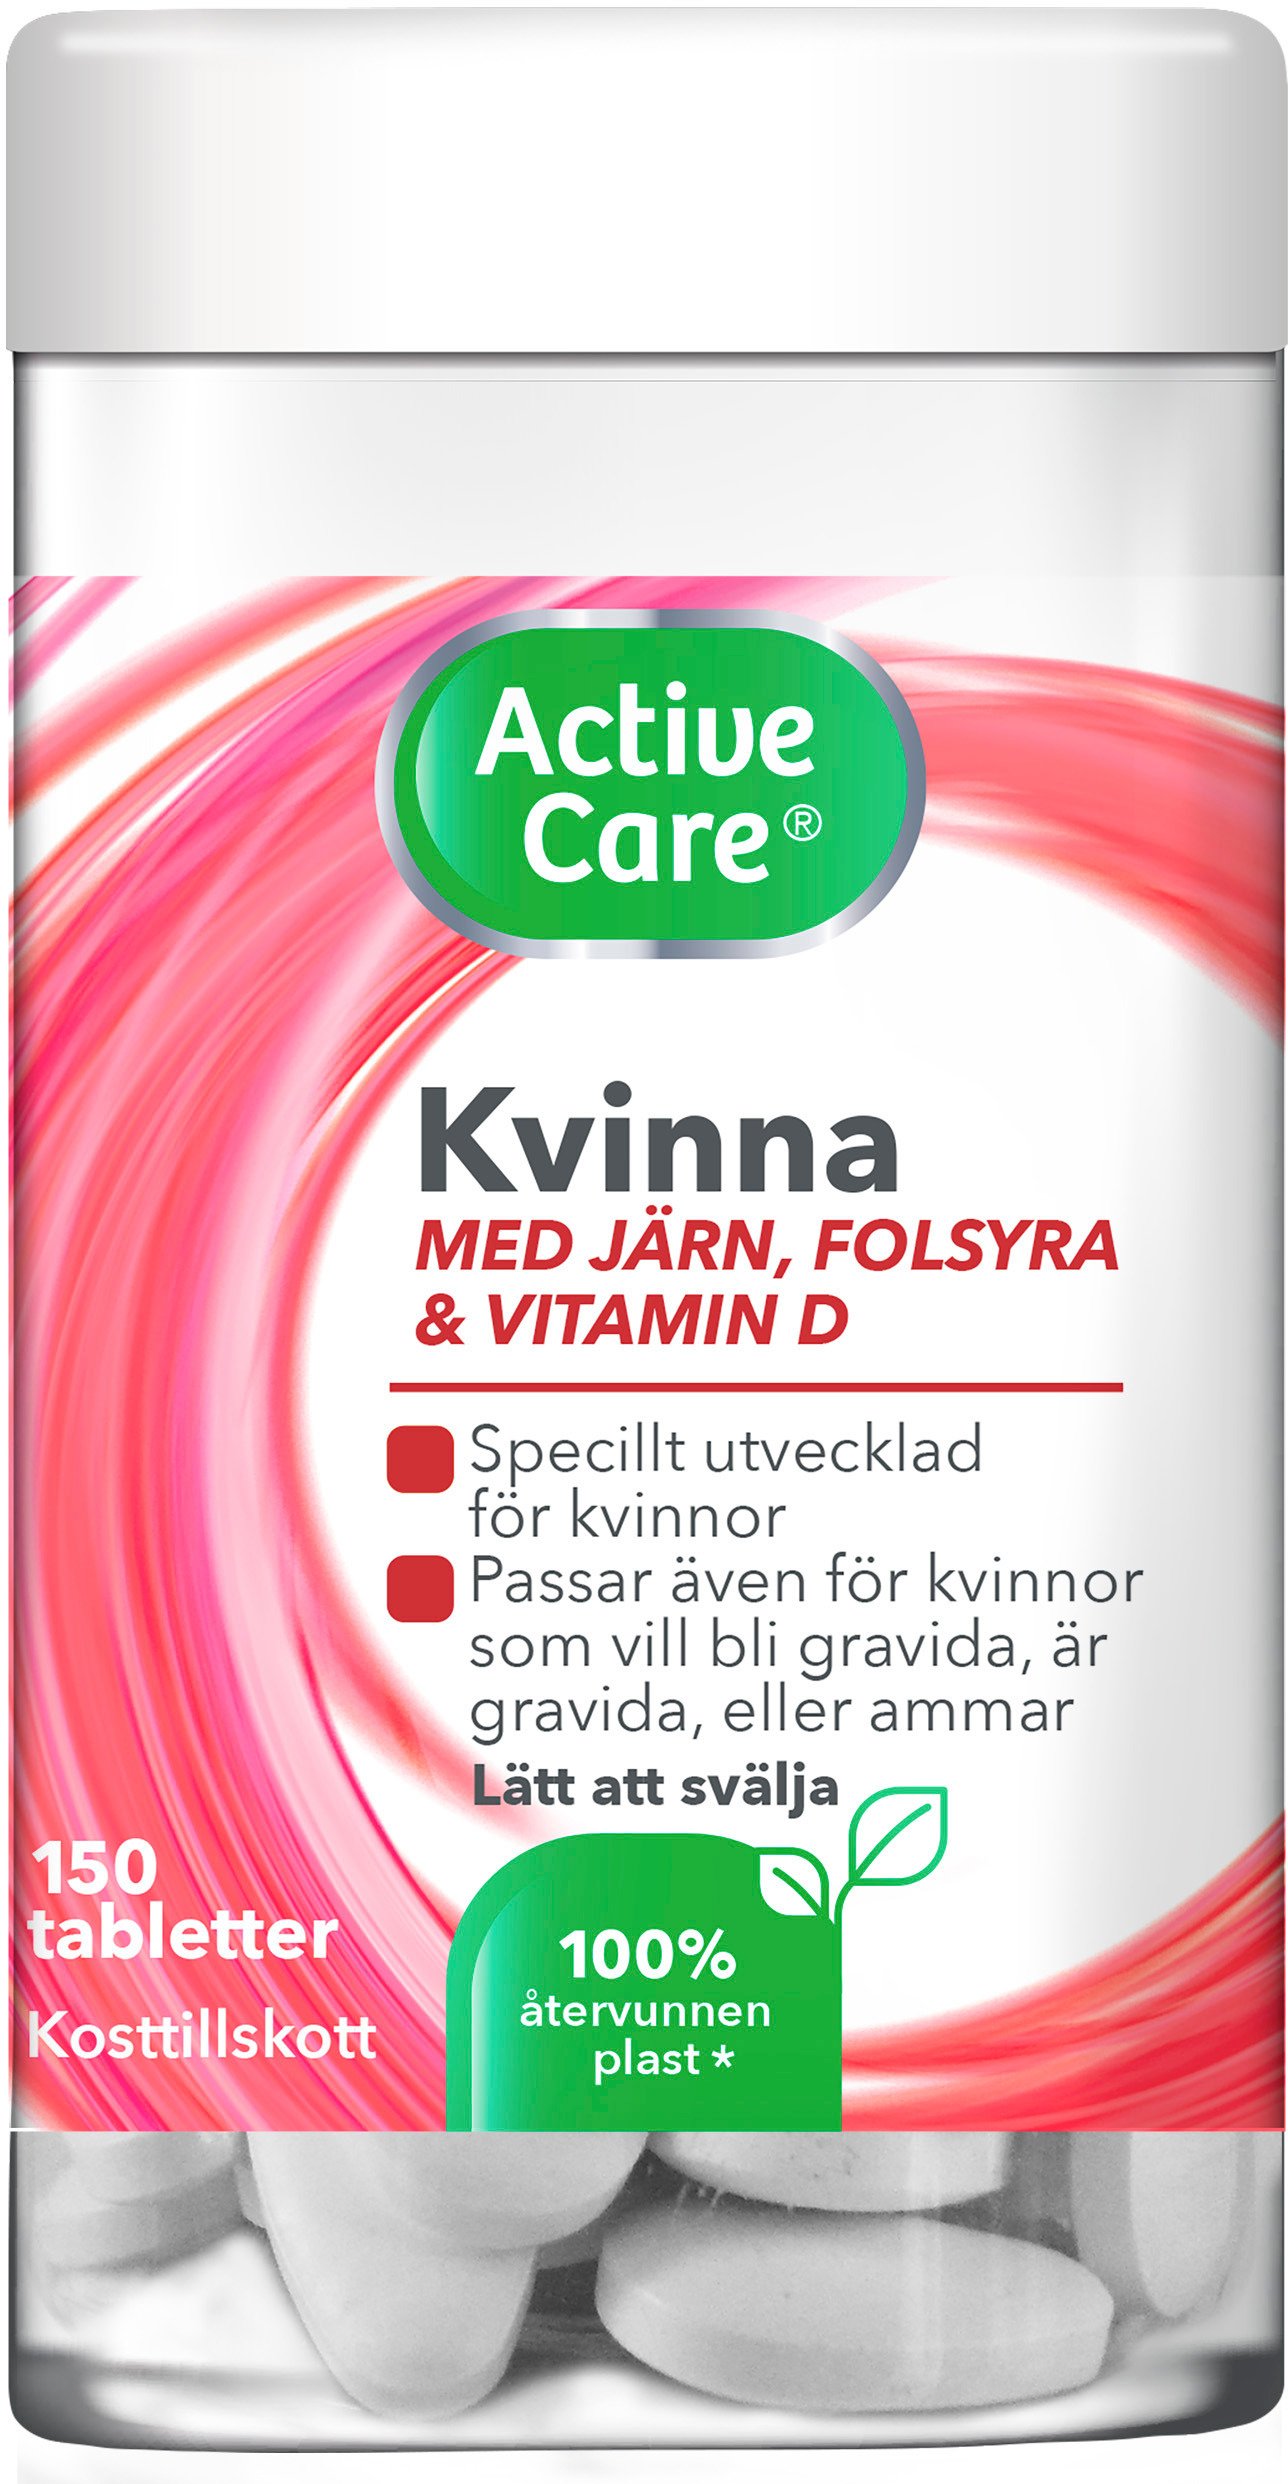 Active Care Kvinna 150 tabletter